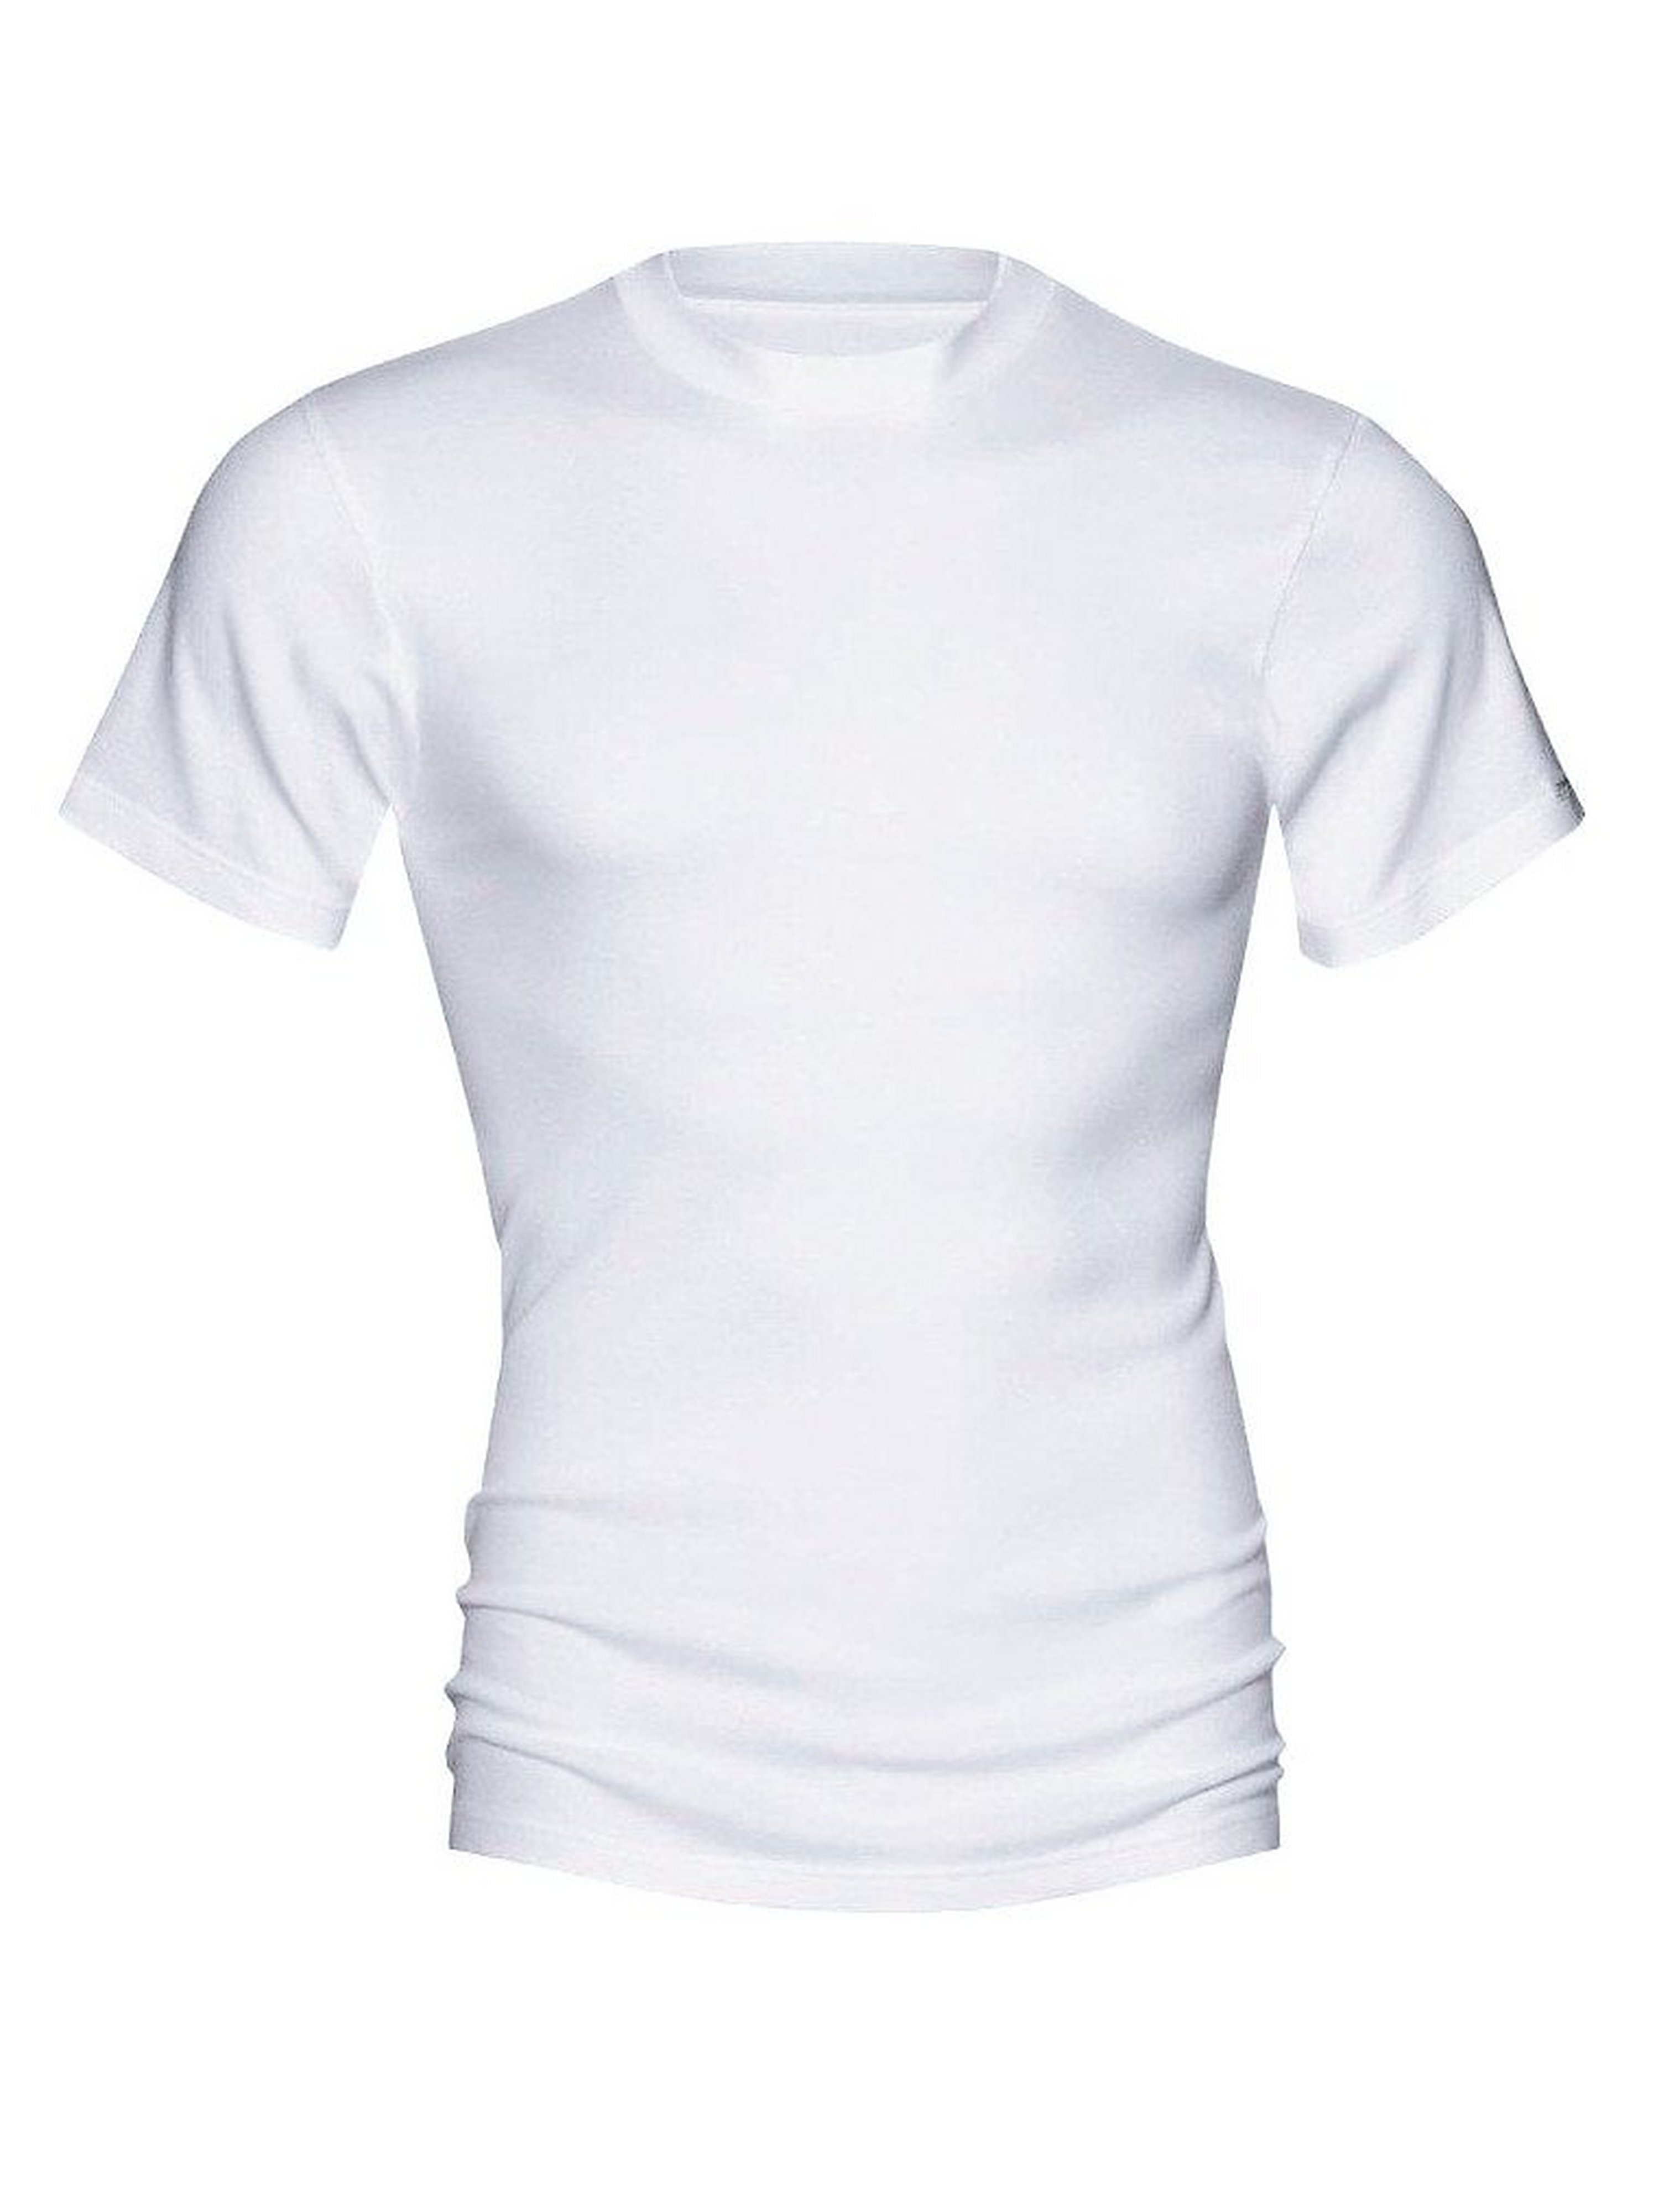 Le T-shirt  Mey blanc taille 7